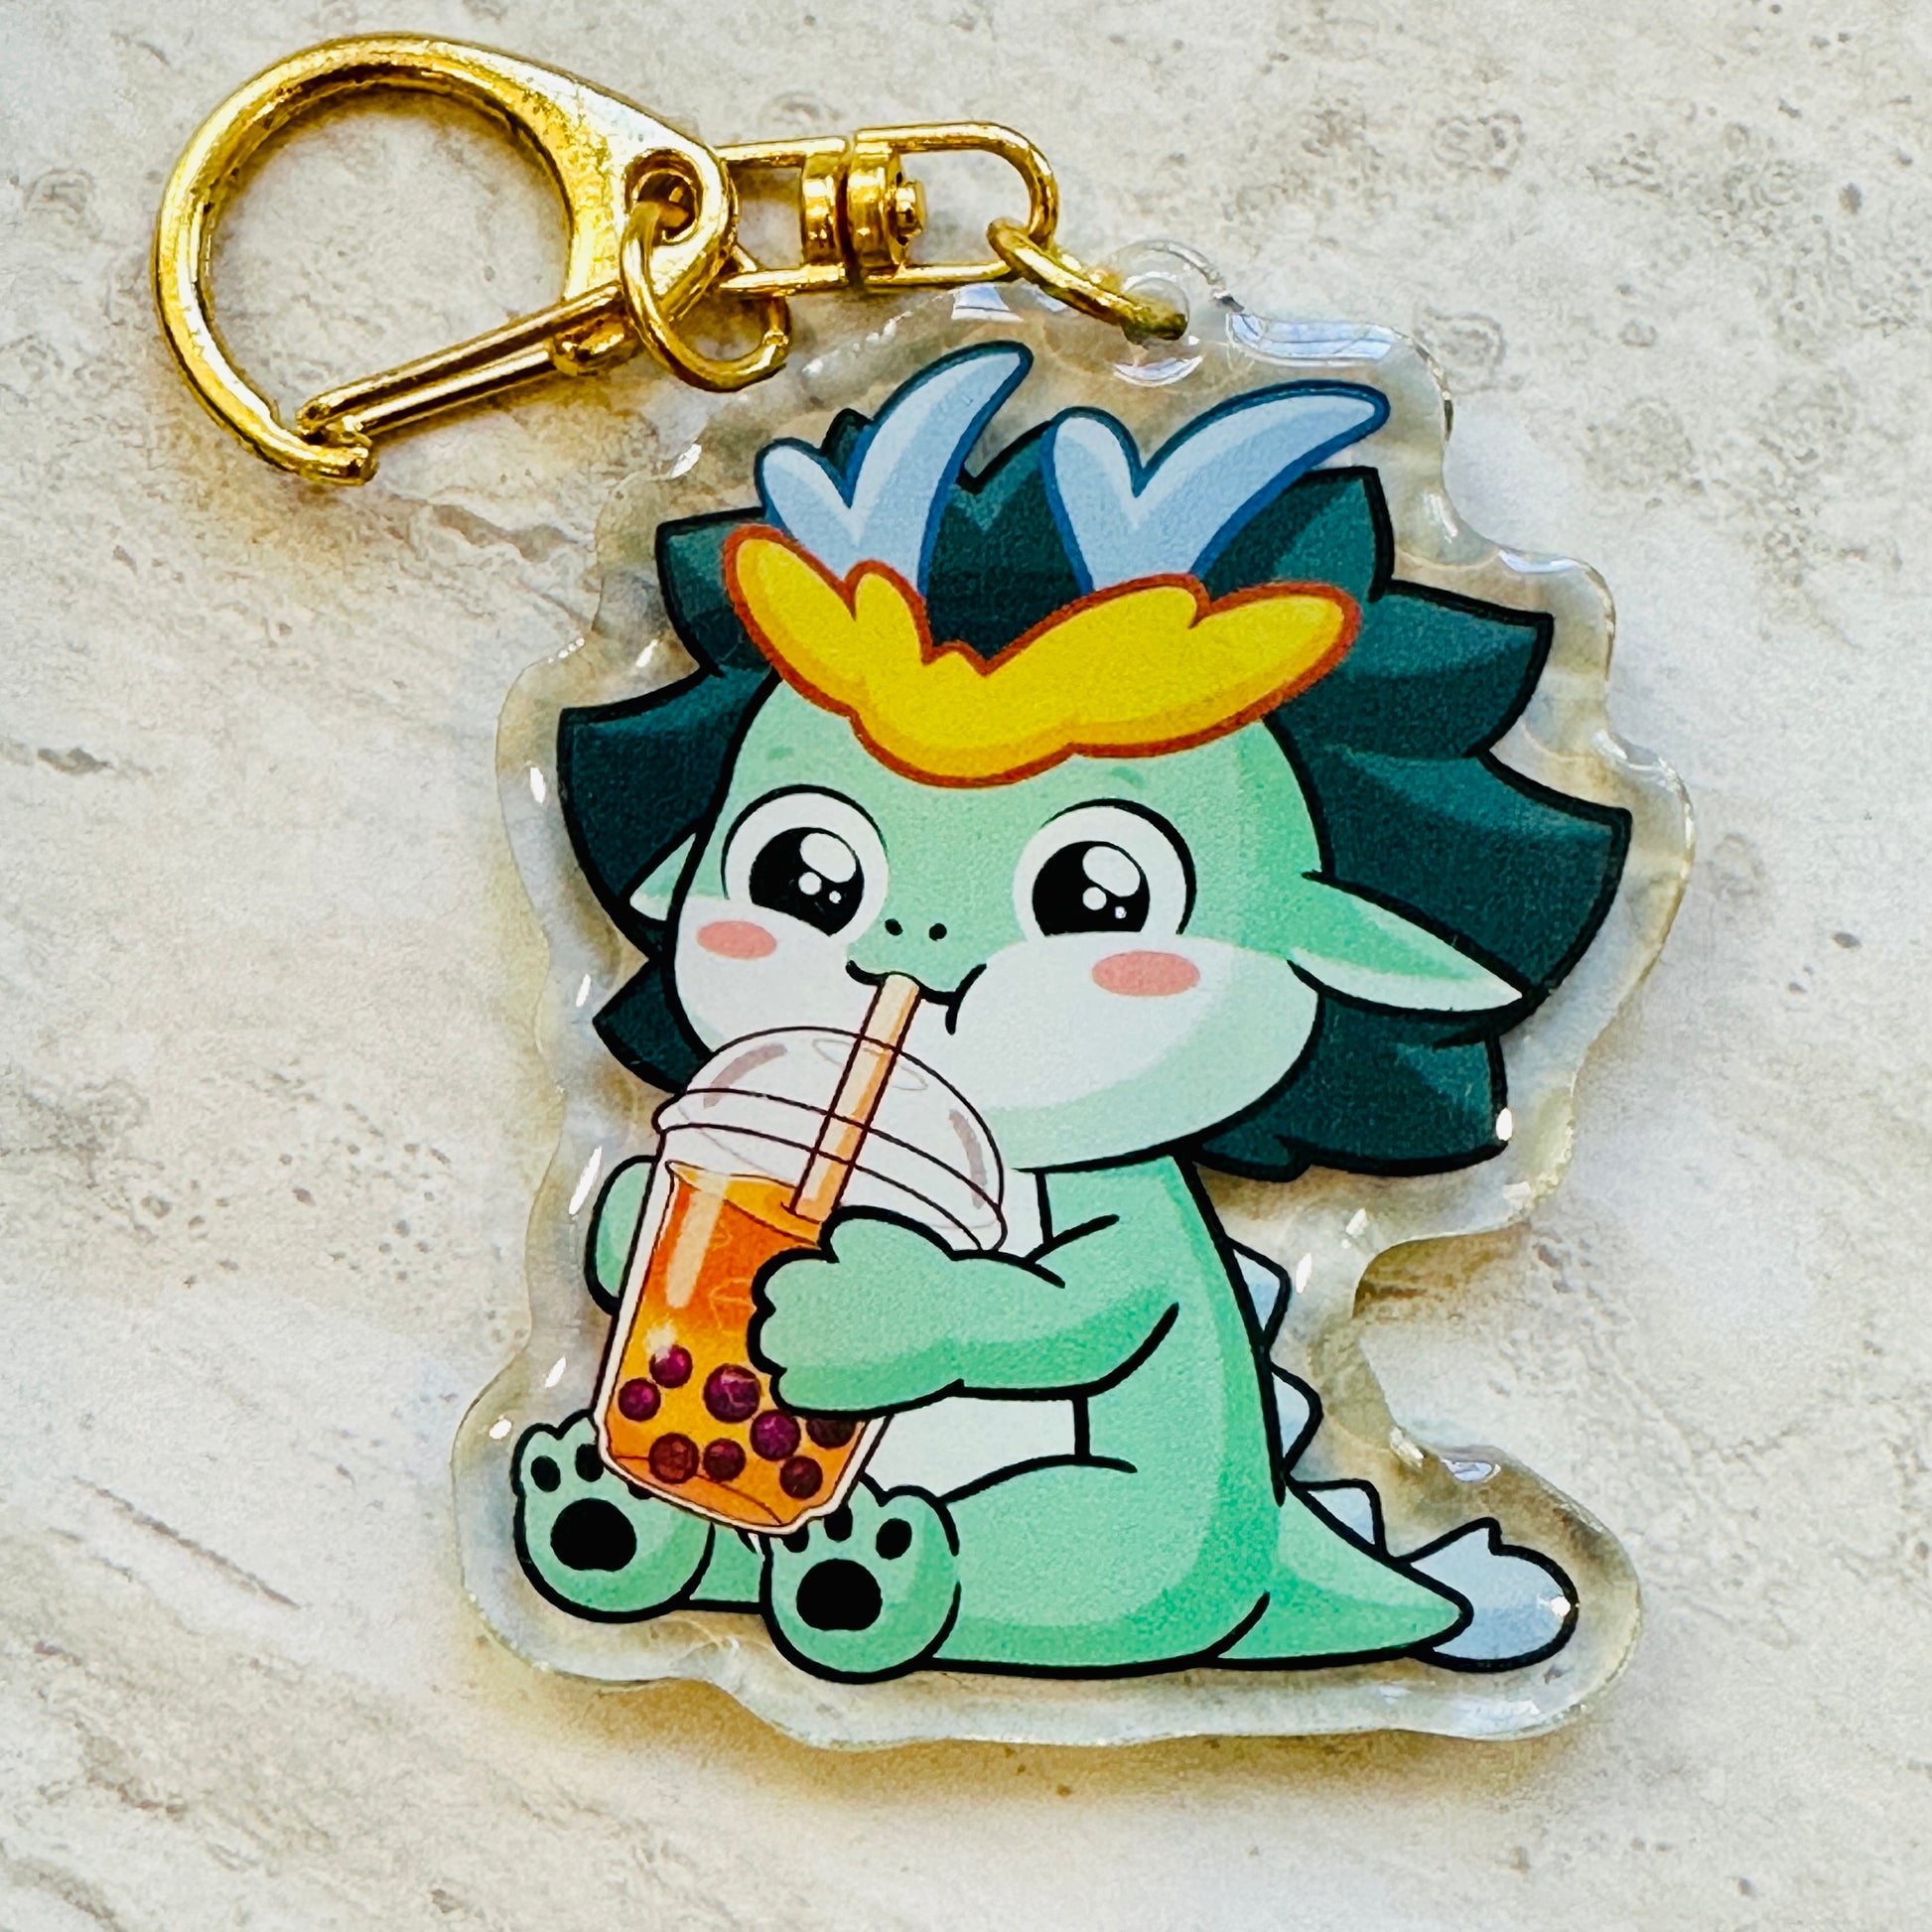 Cute Dragon Keychains Acrylic Keychain Charm Gift Year of the Dragon